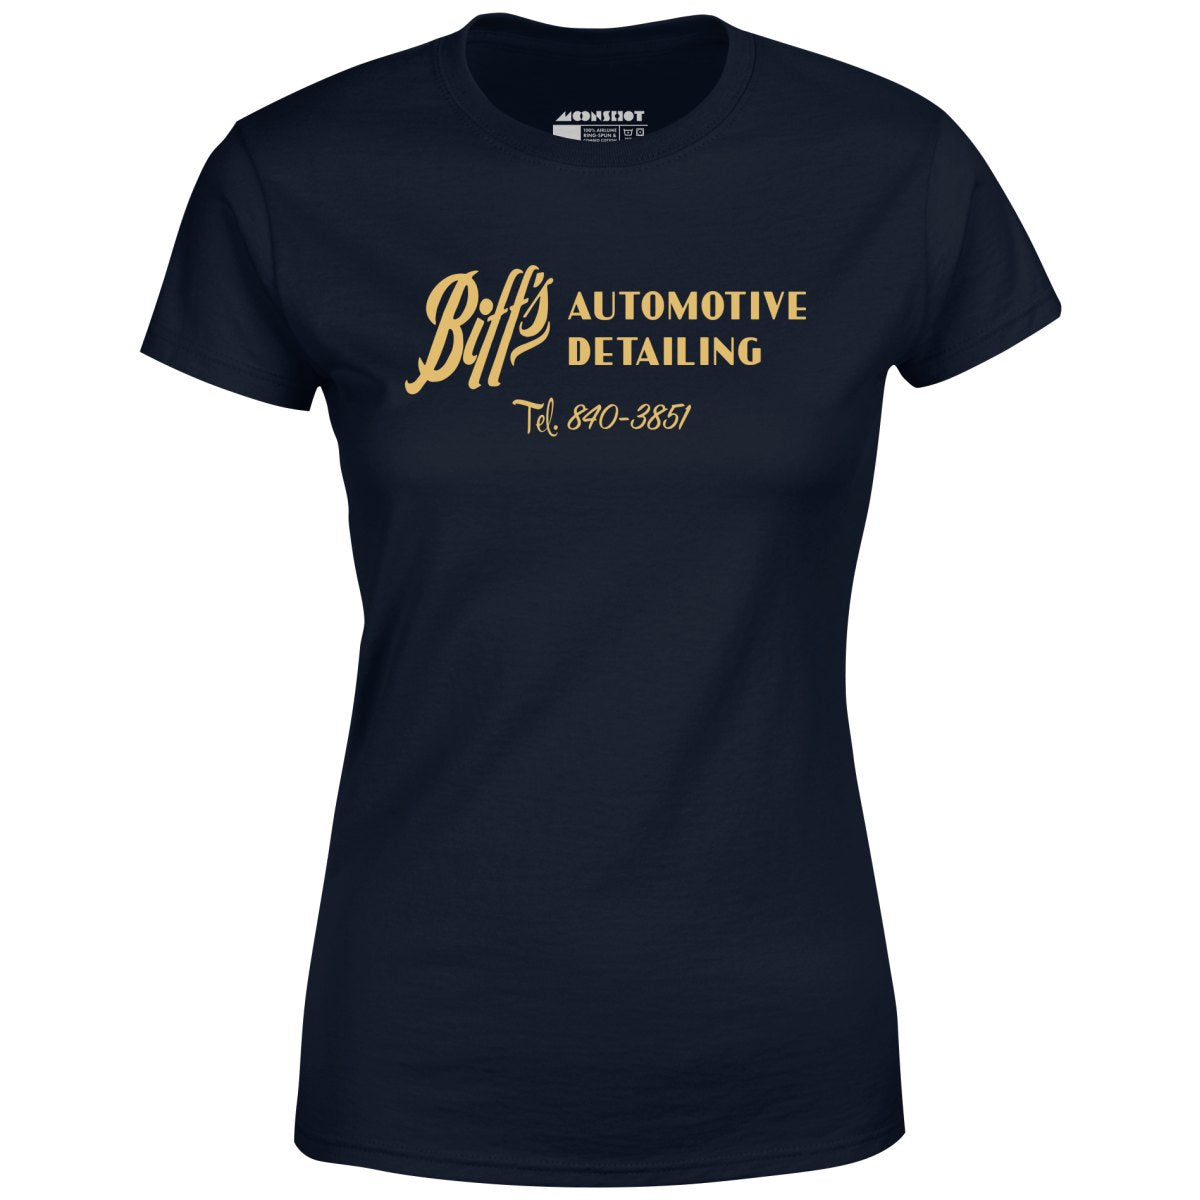 Biff's Automotive Detailing - Women's T-Shirt